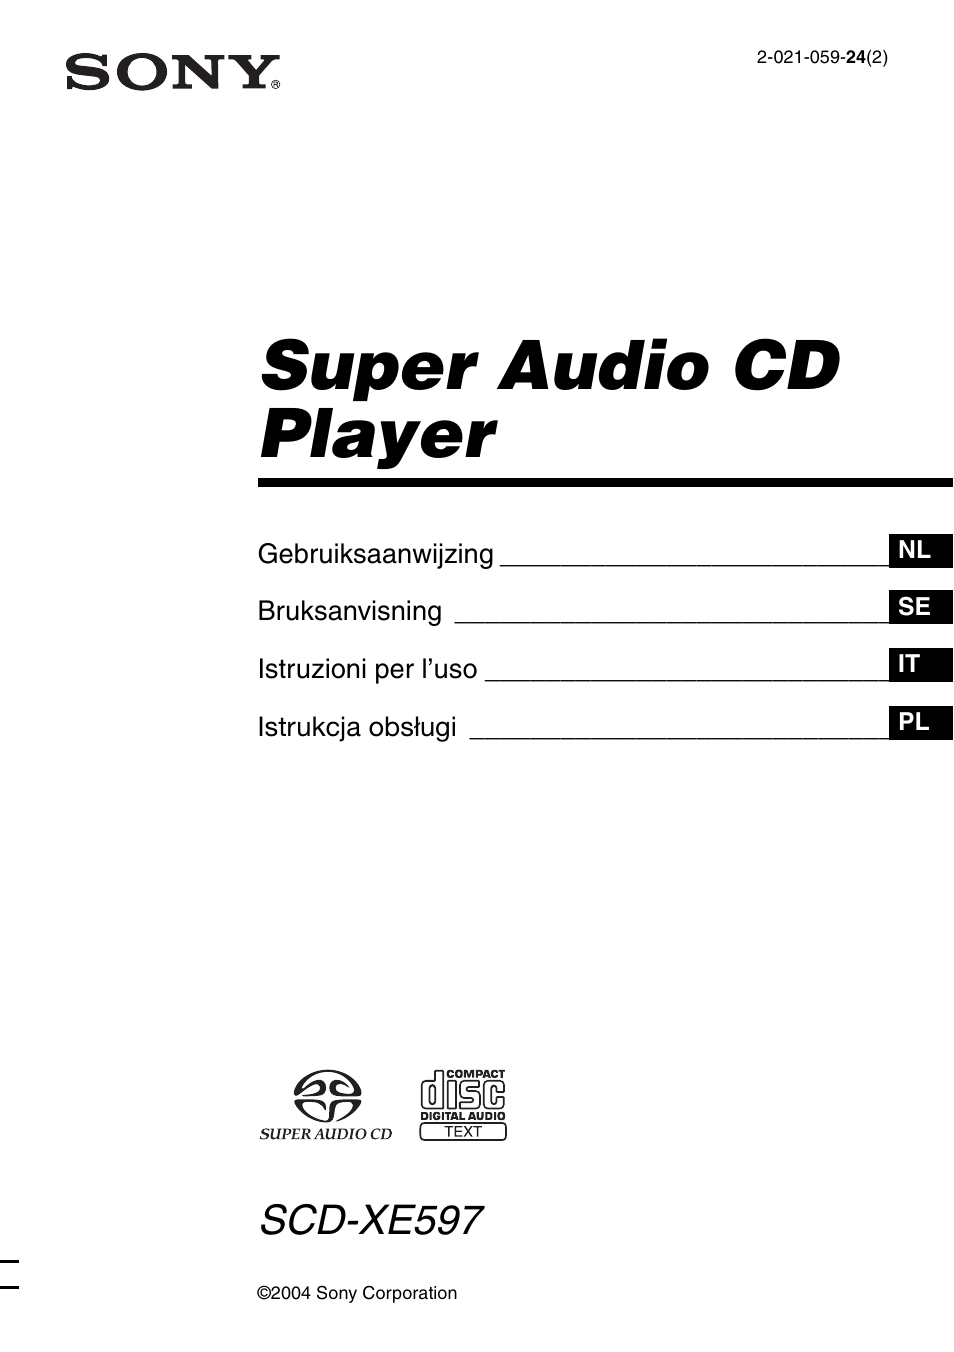 Sony SCD-XE597 Manuale d'uso | Pagine: 100